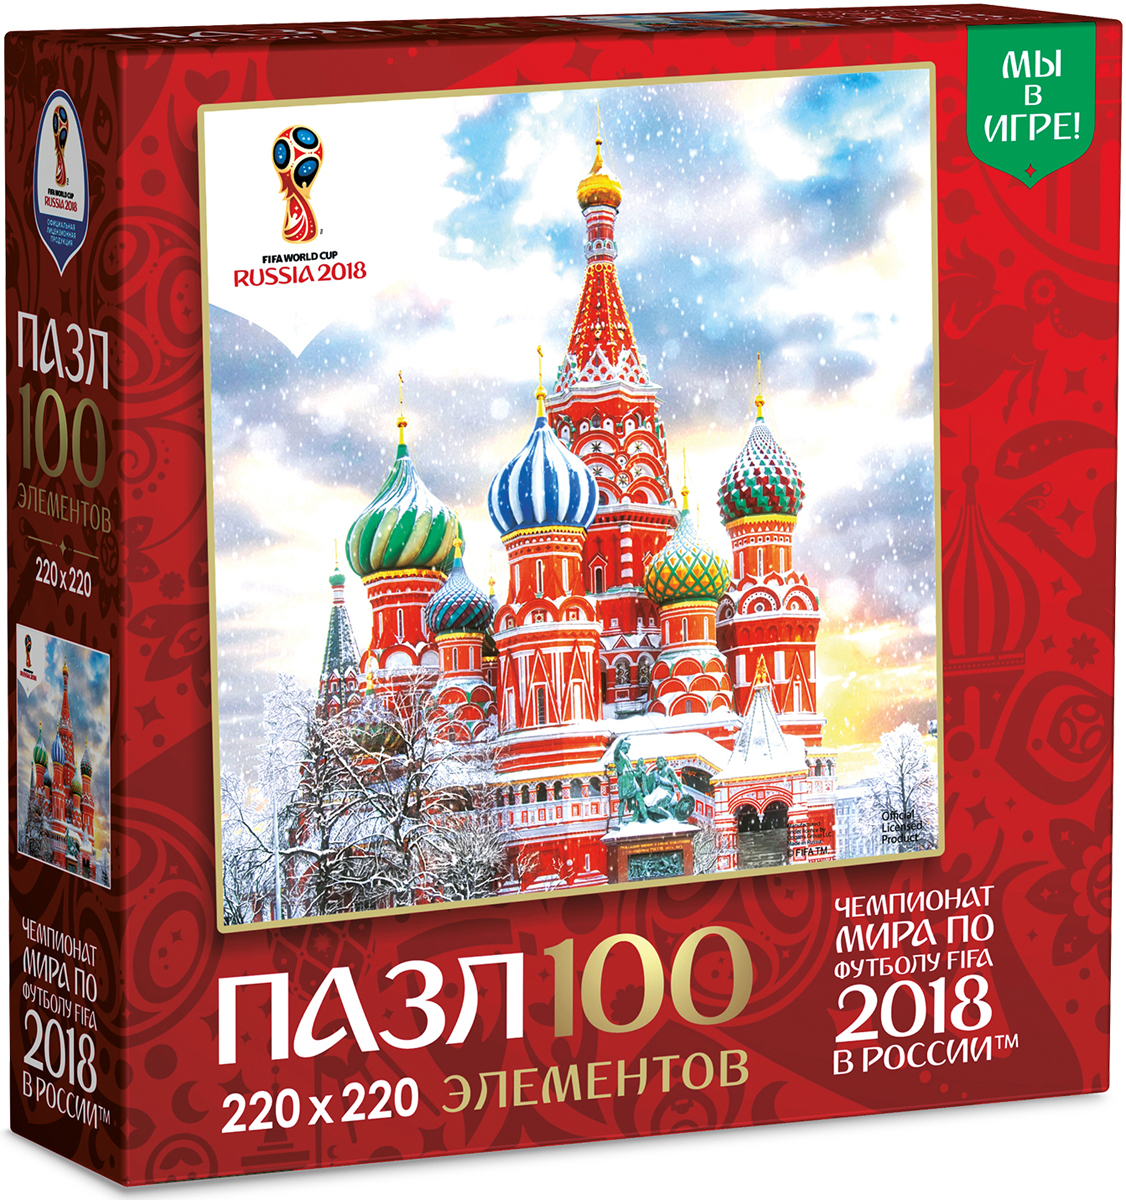 FIFA World Cup Russia 2018 Пазл Города Москва 03795